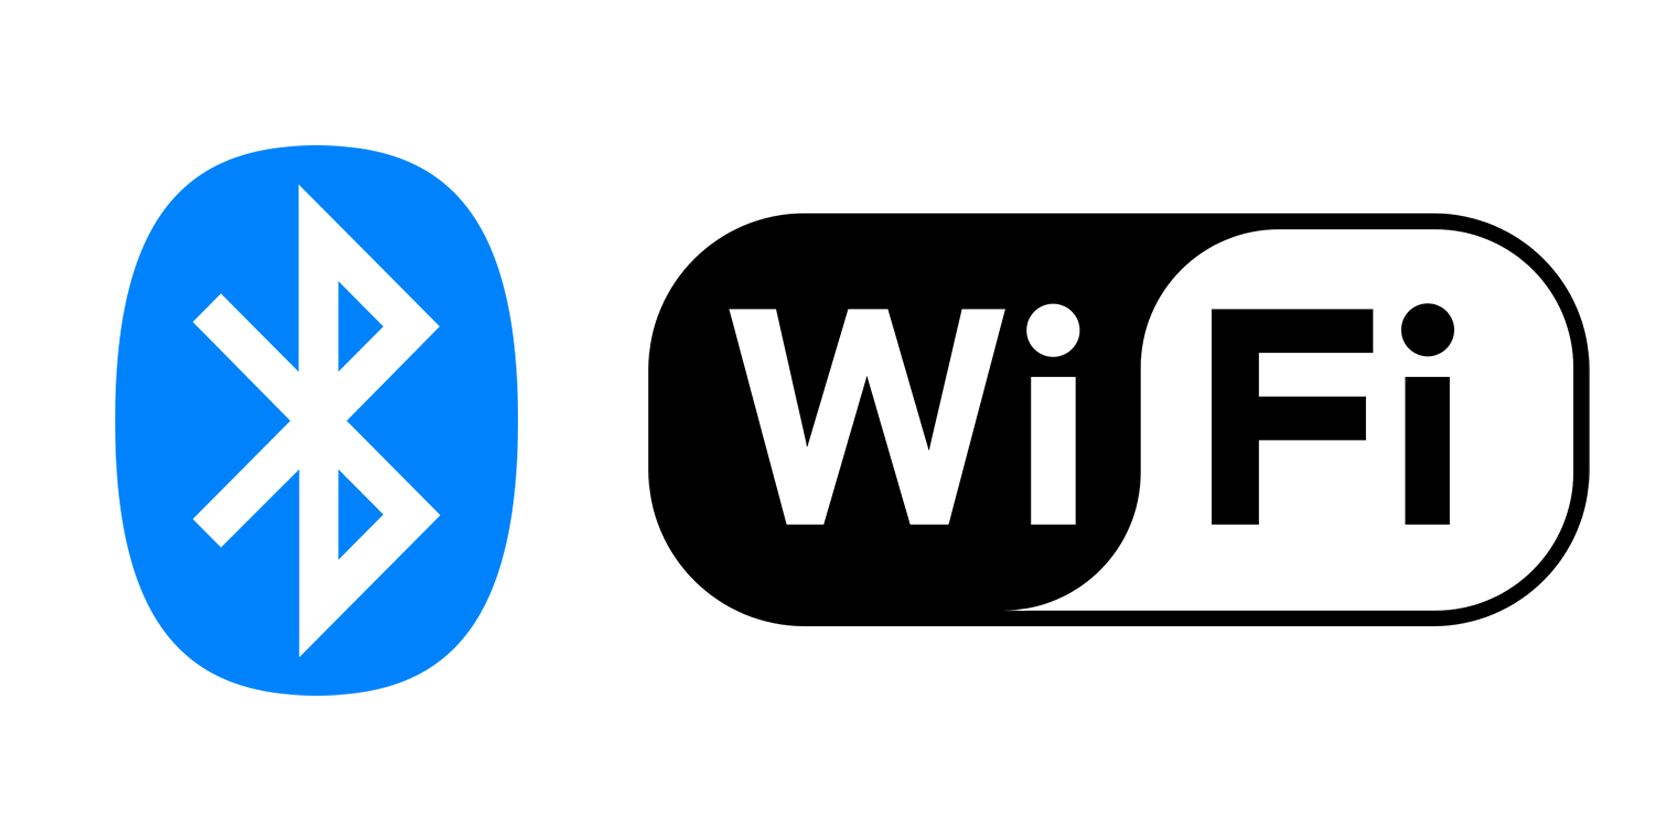 Bluetooth and Wi Fi logos - 7 cose da considerare quando si acquista un gimbal